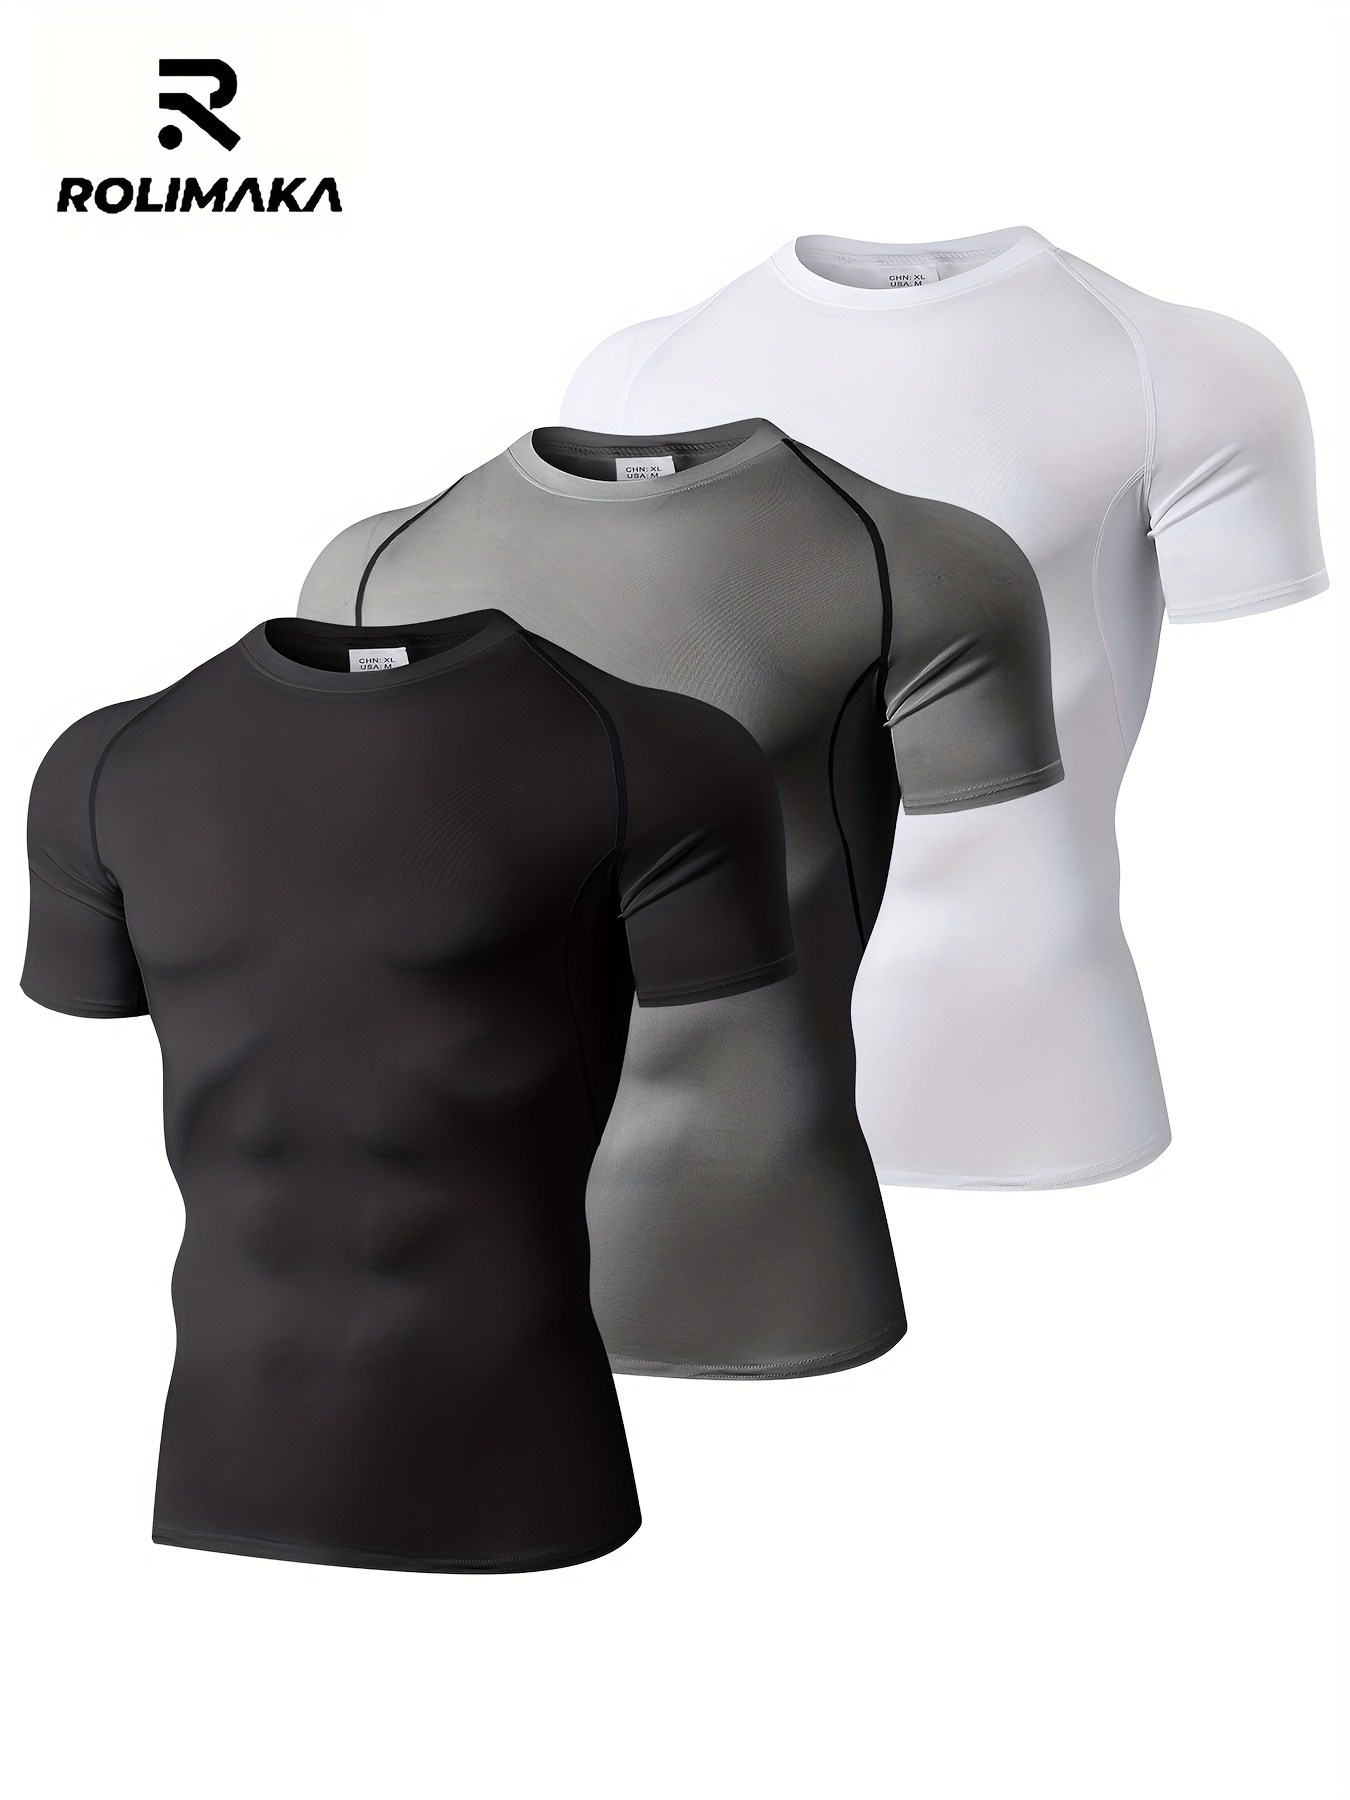 Camisas de compresión de manga larga para hombre, camisetas de  entrenamiento atlético, capa Base, secado rápido, paquete de 2 - AliExpress